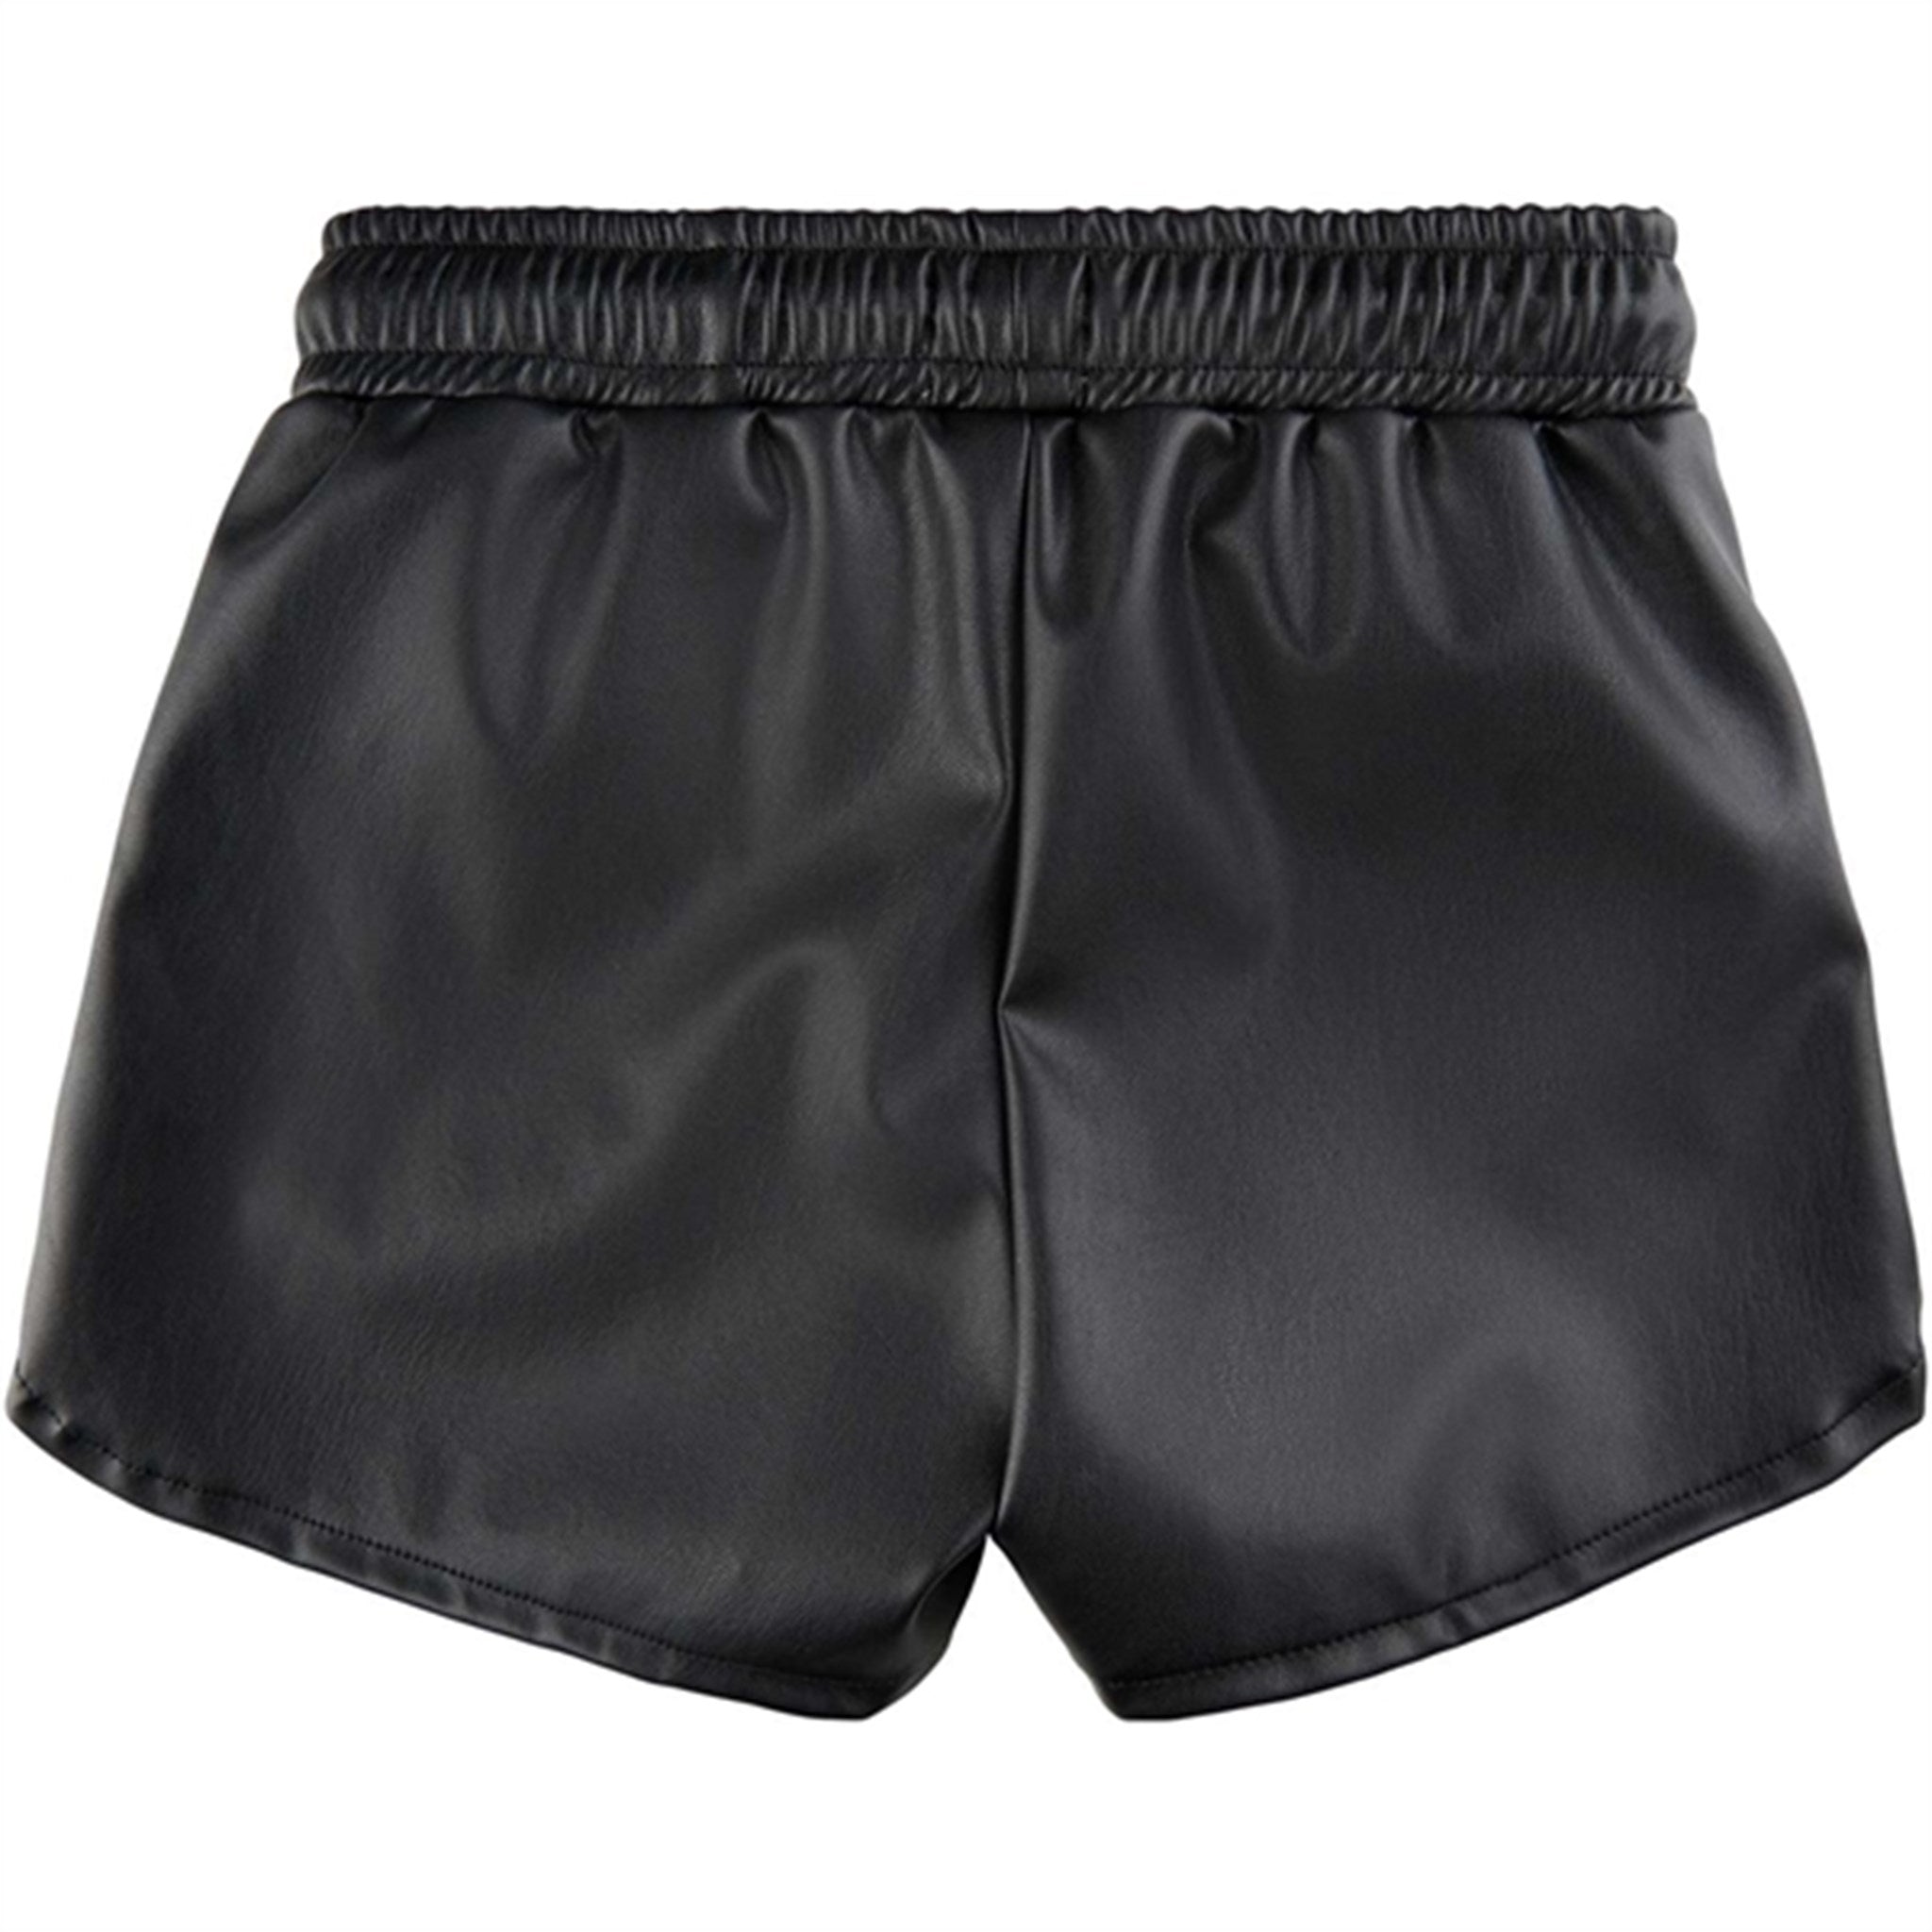 The New Black Ea PU Shorts 2